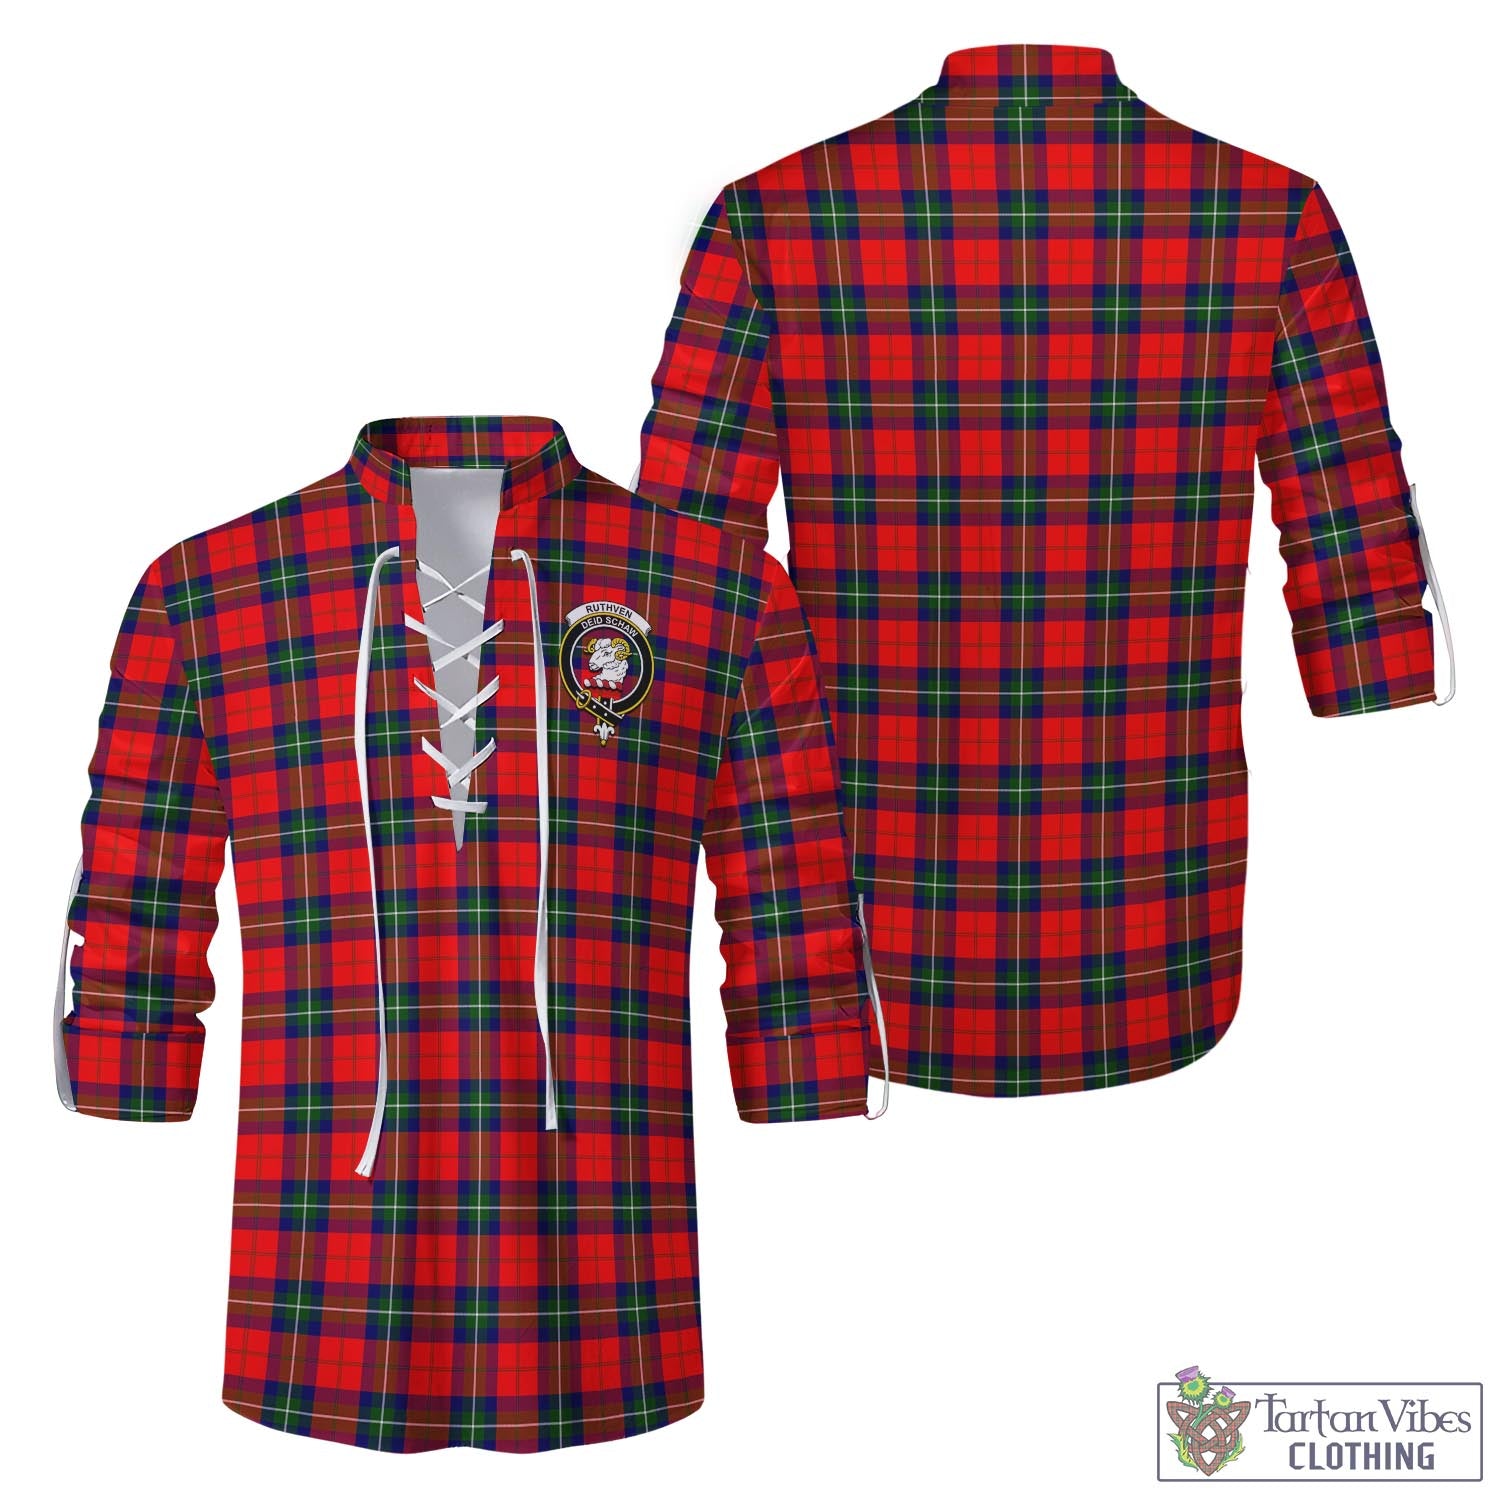 Tartan Vibes Clothing Ruthven Modern Tartan Men's Scottish Traditional Jacobite Ghillie Kilt Shirt with Family Crest